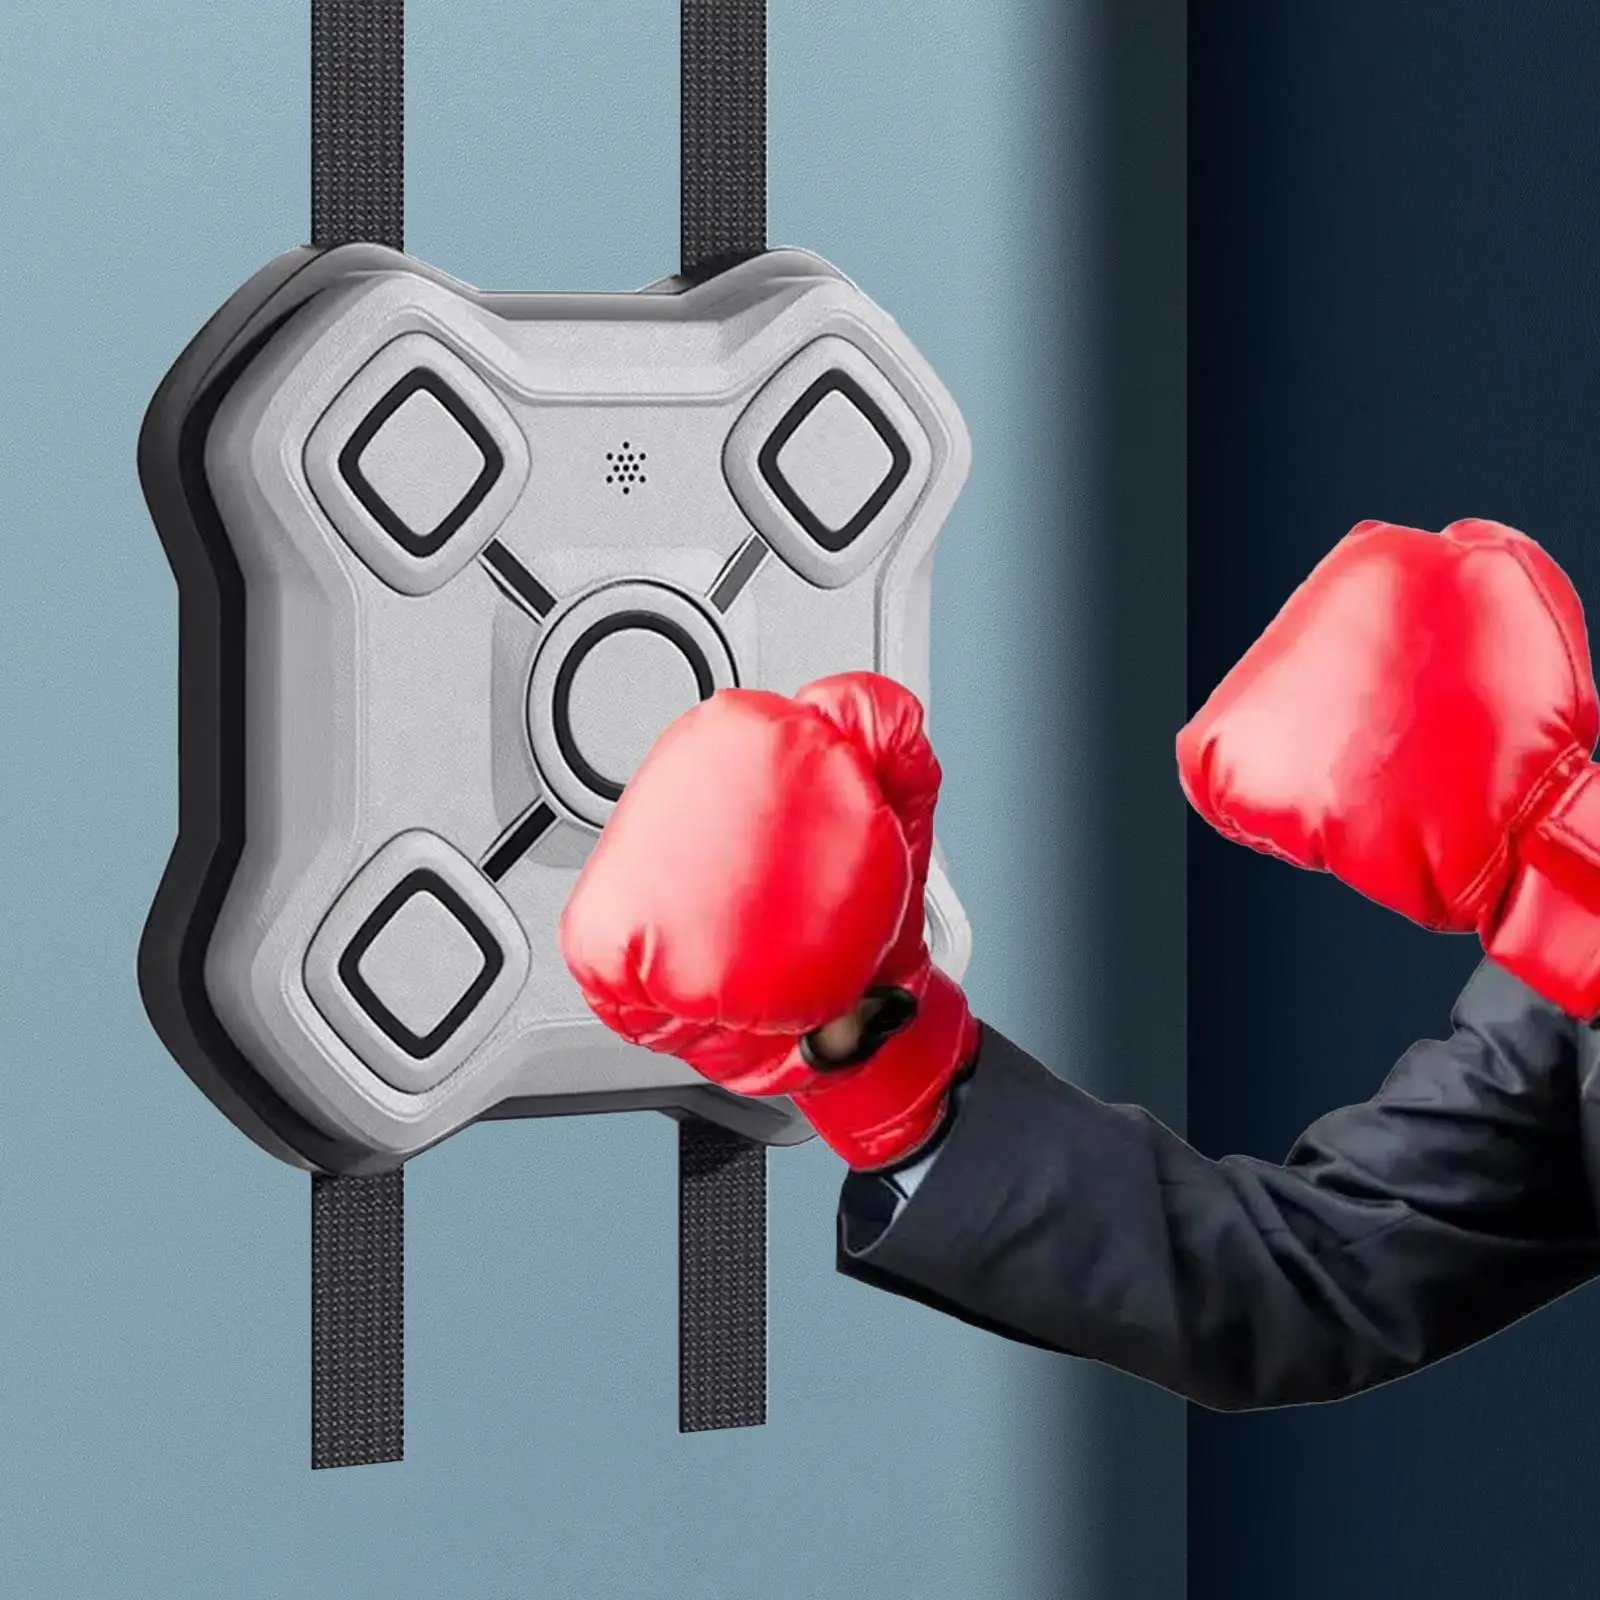 Music Boxing Machine Wall Target Reaction Target Fitness Equipment Punching Pad